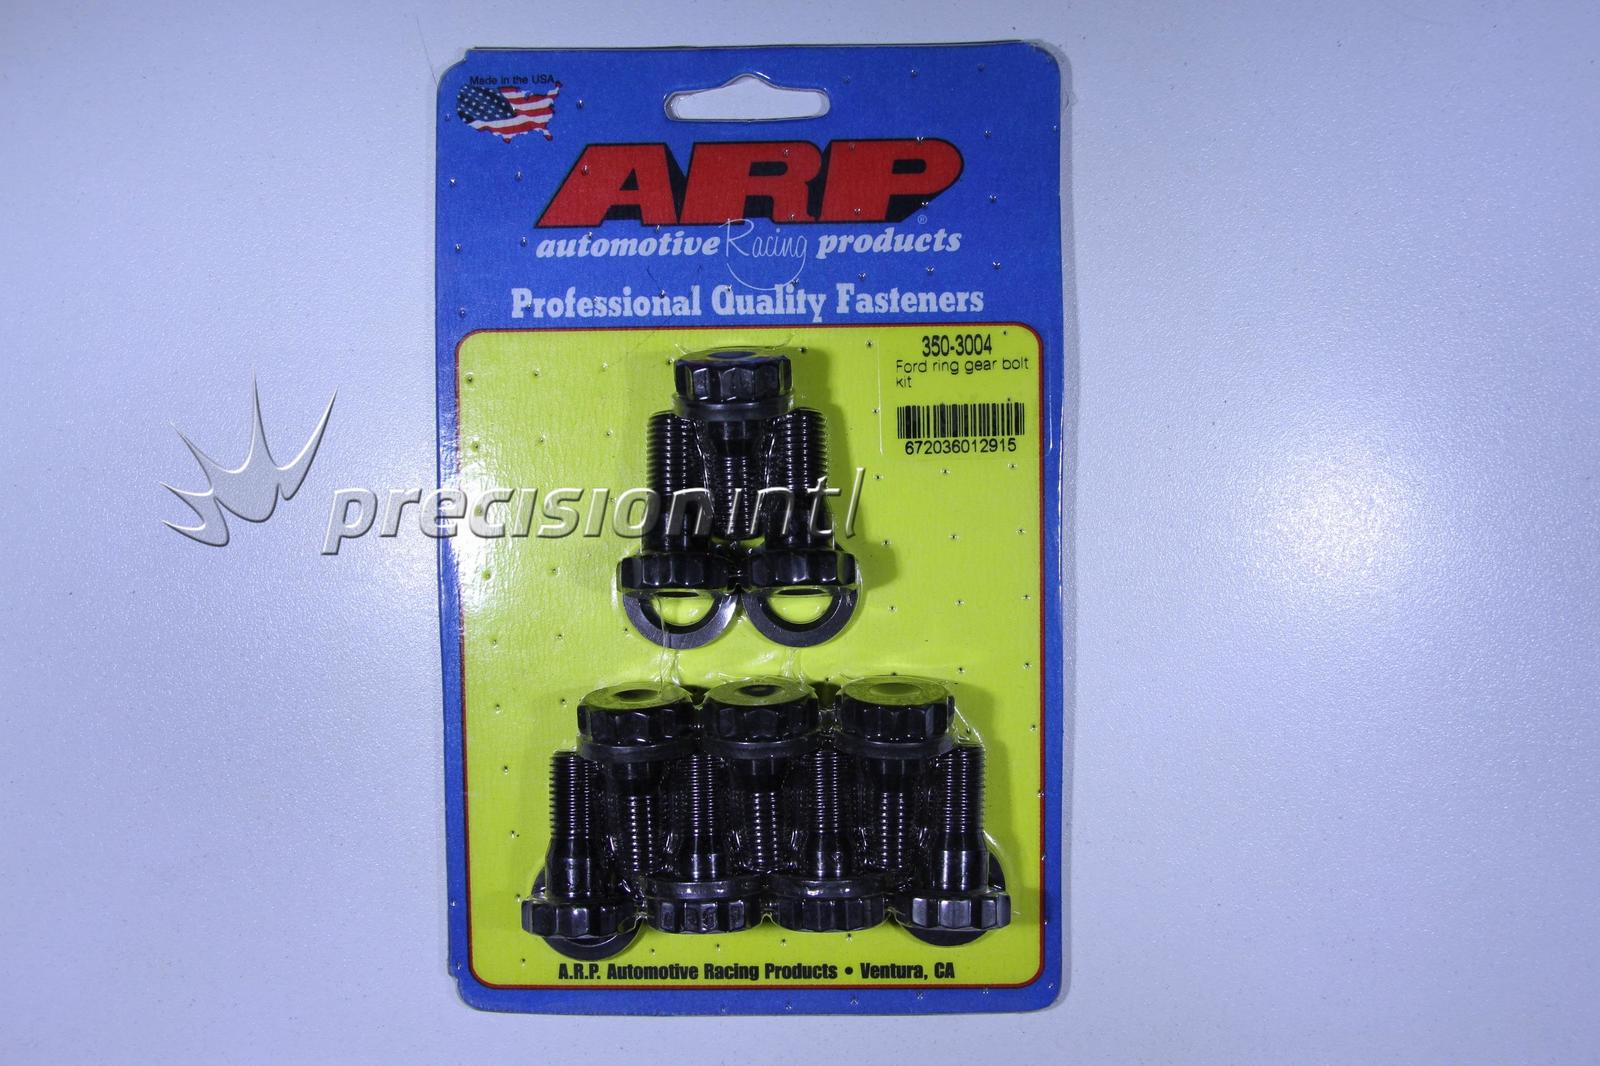 ARP Ford Ring Gear Bolt Kit 350-3004